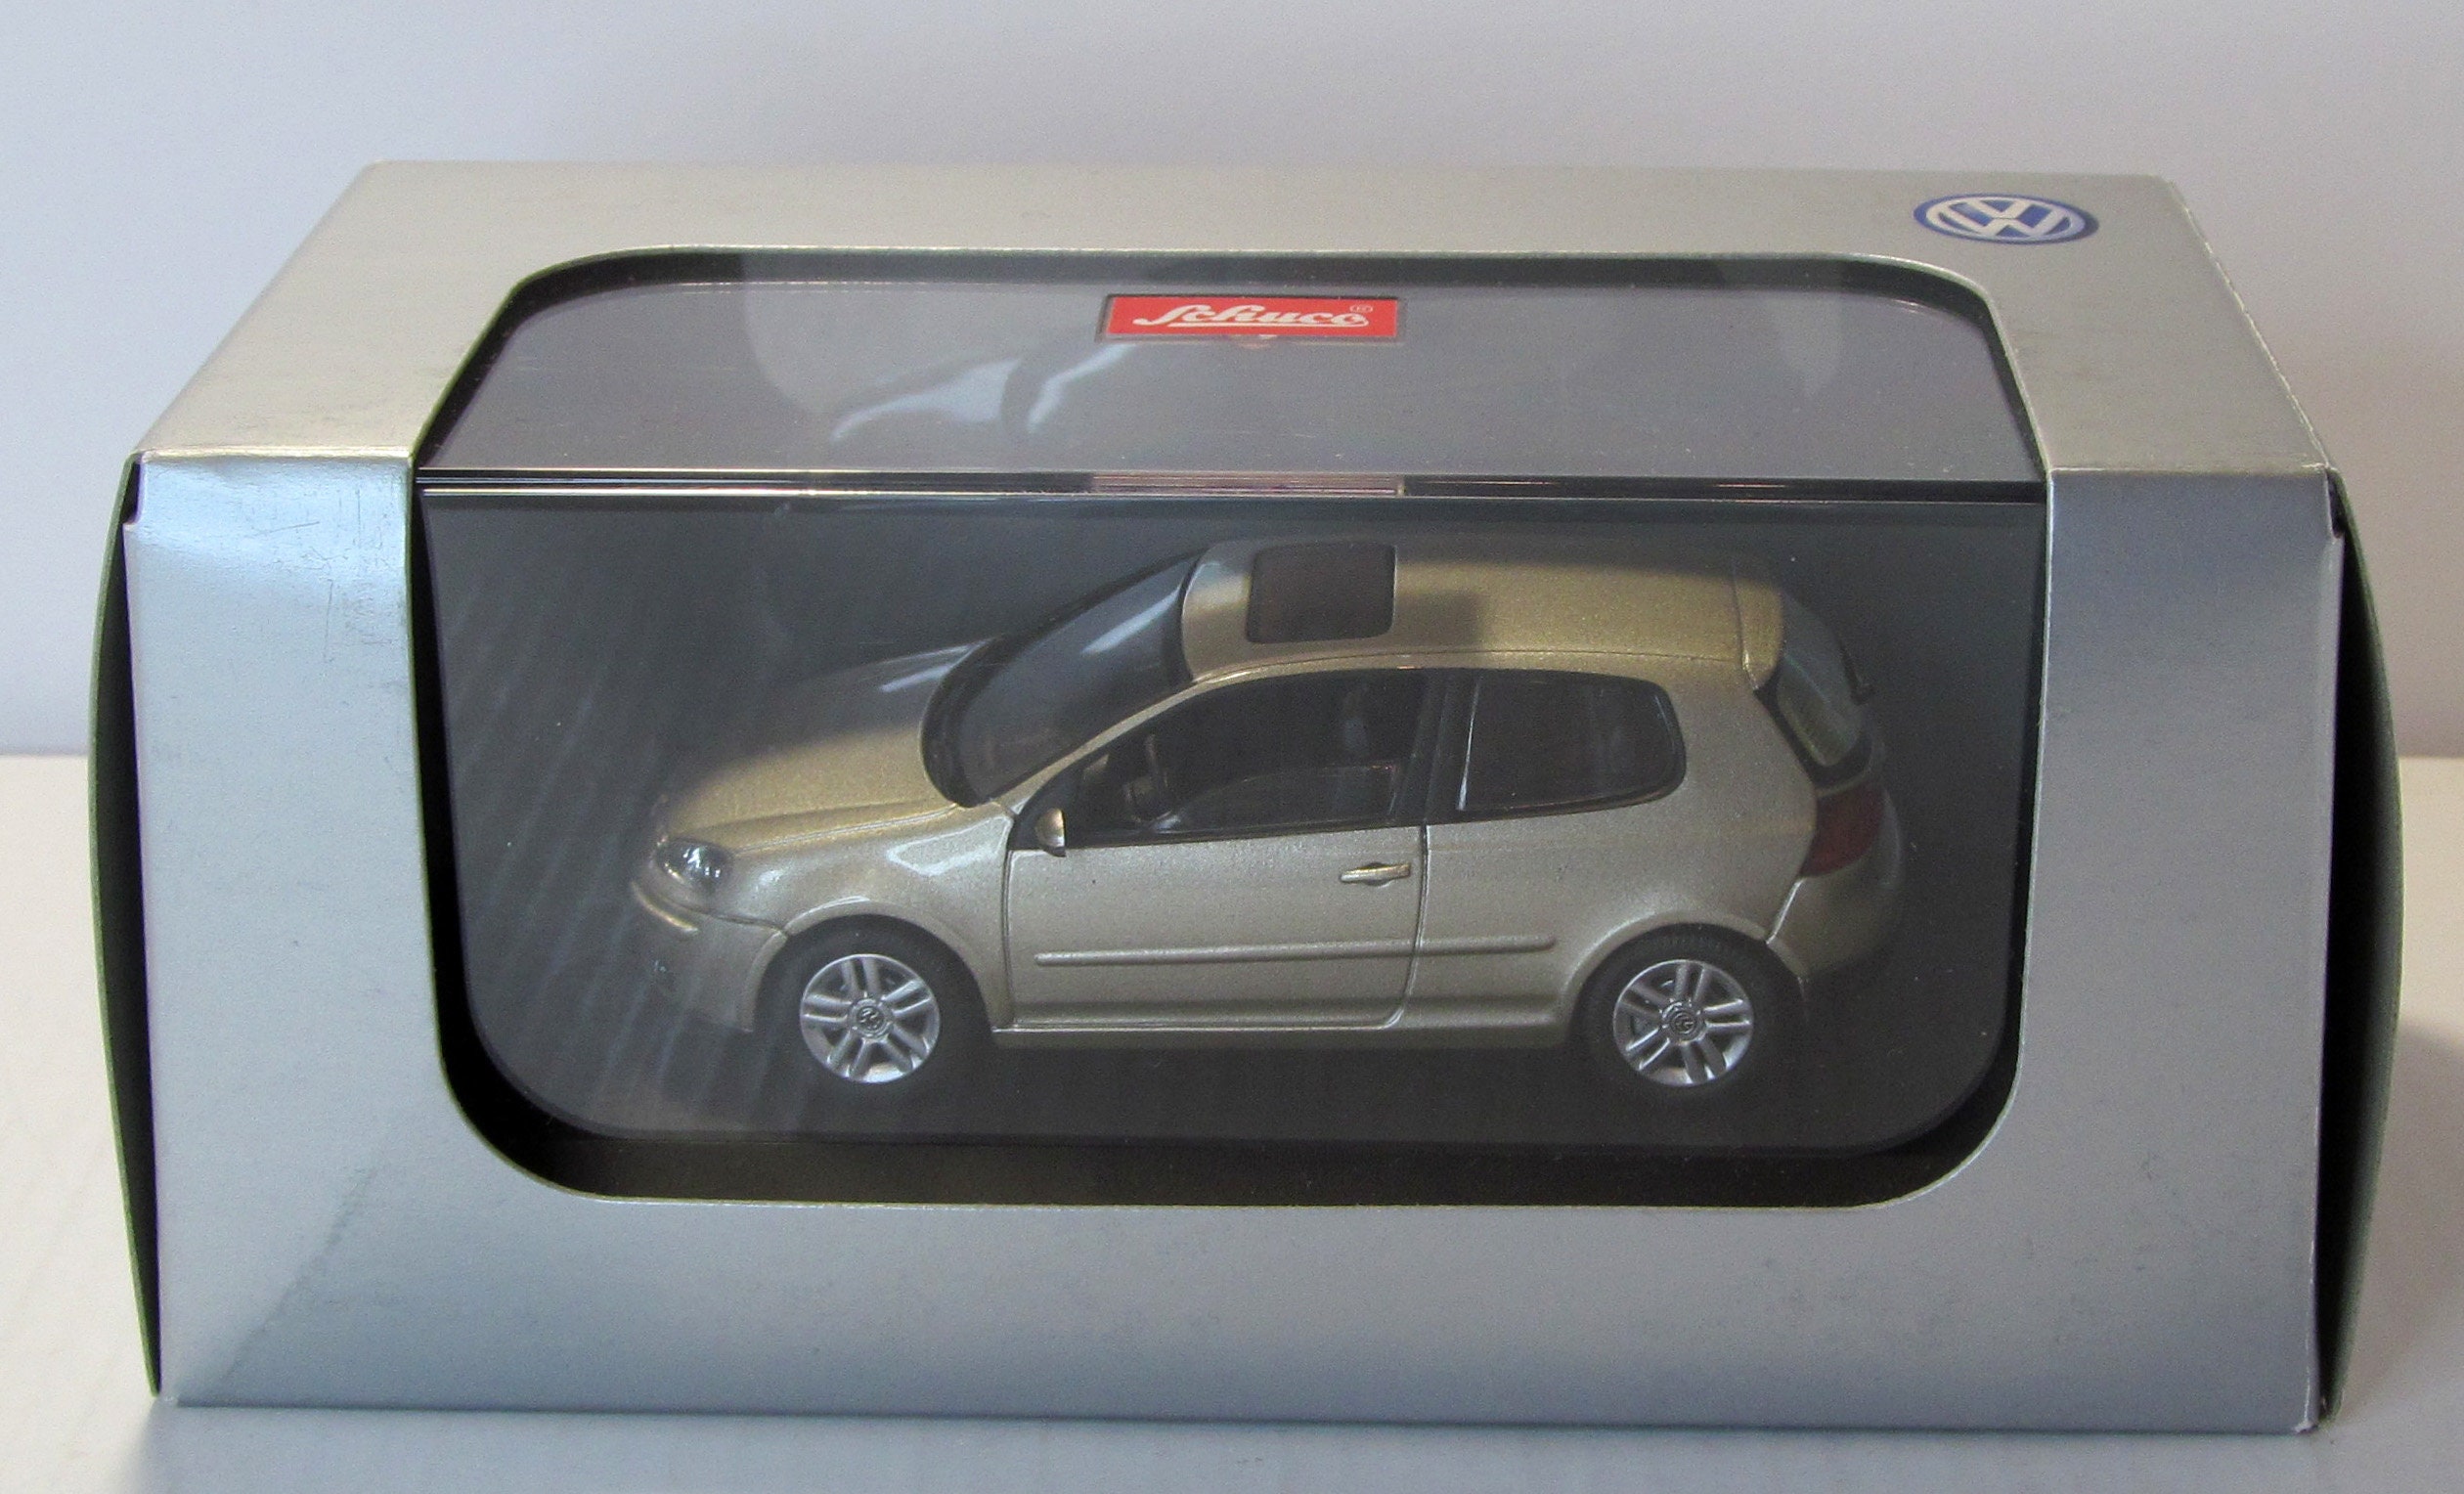 VW Volkswagen Golf V 3 Doors 2003-09, Schuco germany BOX. Piece Diecast  Collection. Metal Car Model 1/43. Diecast Scale 1:43. Hobby 